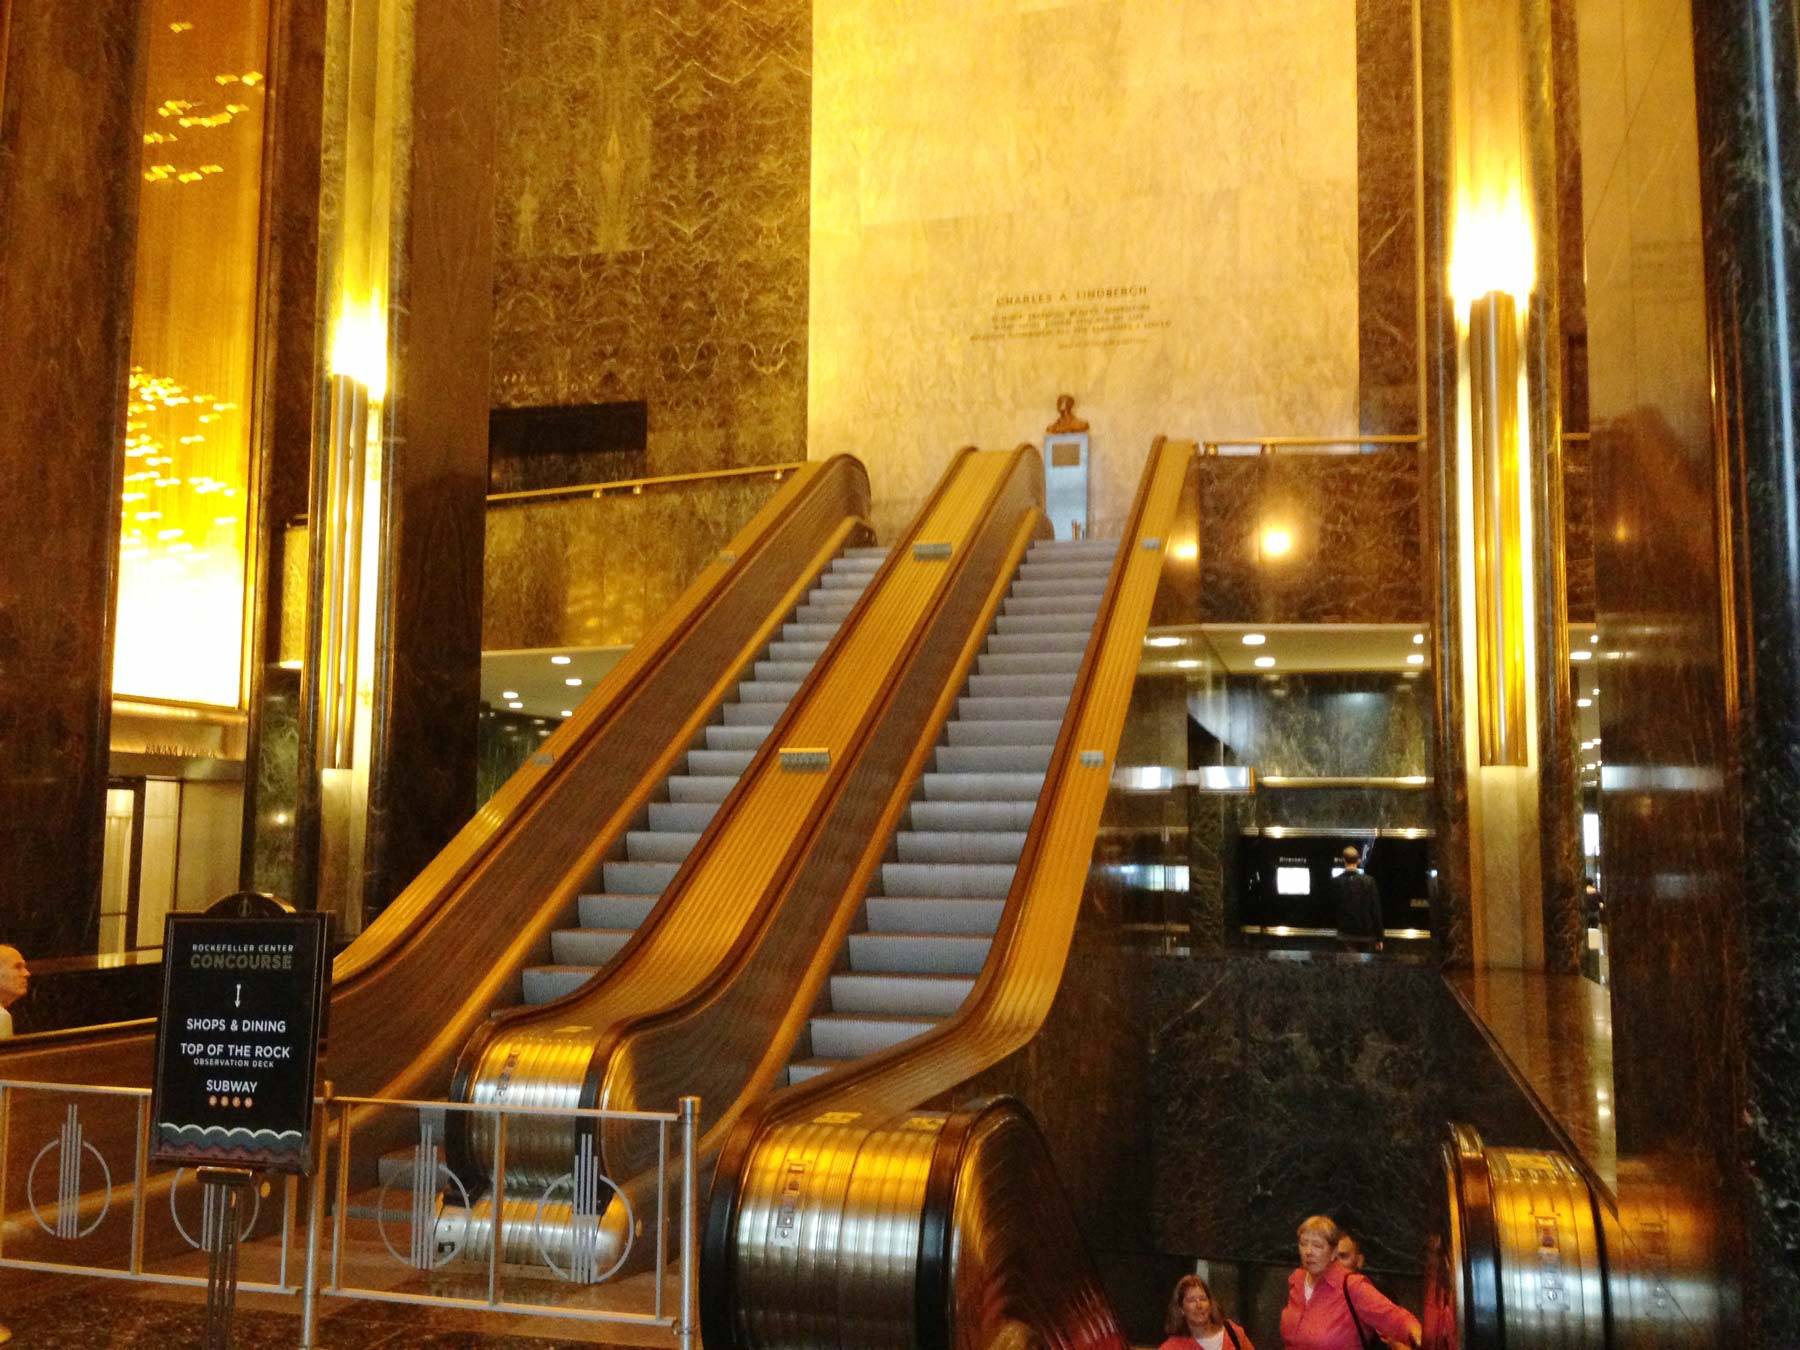 Some ritzy escalators